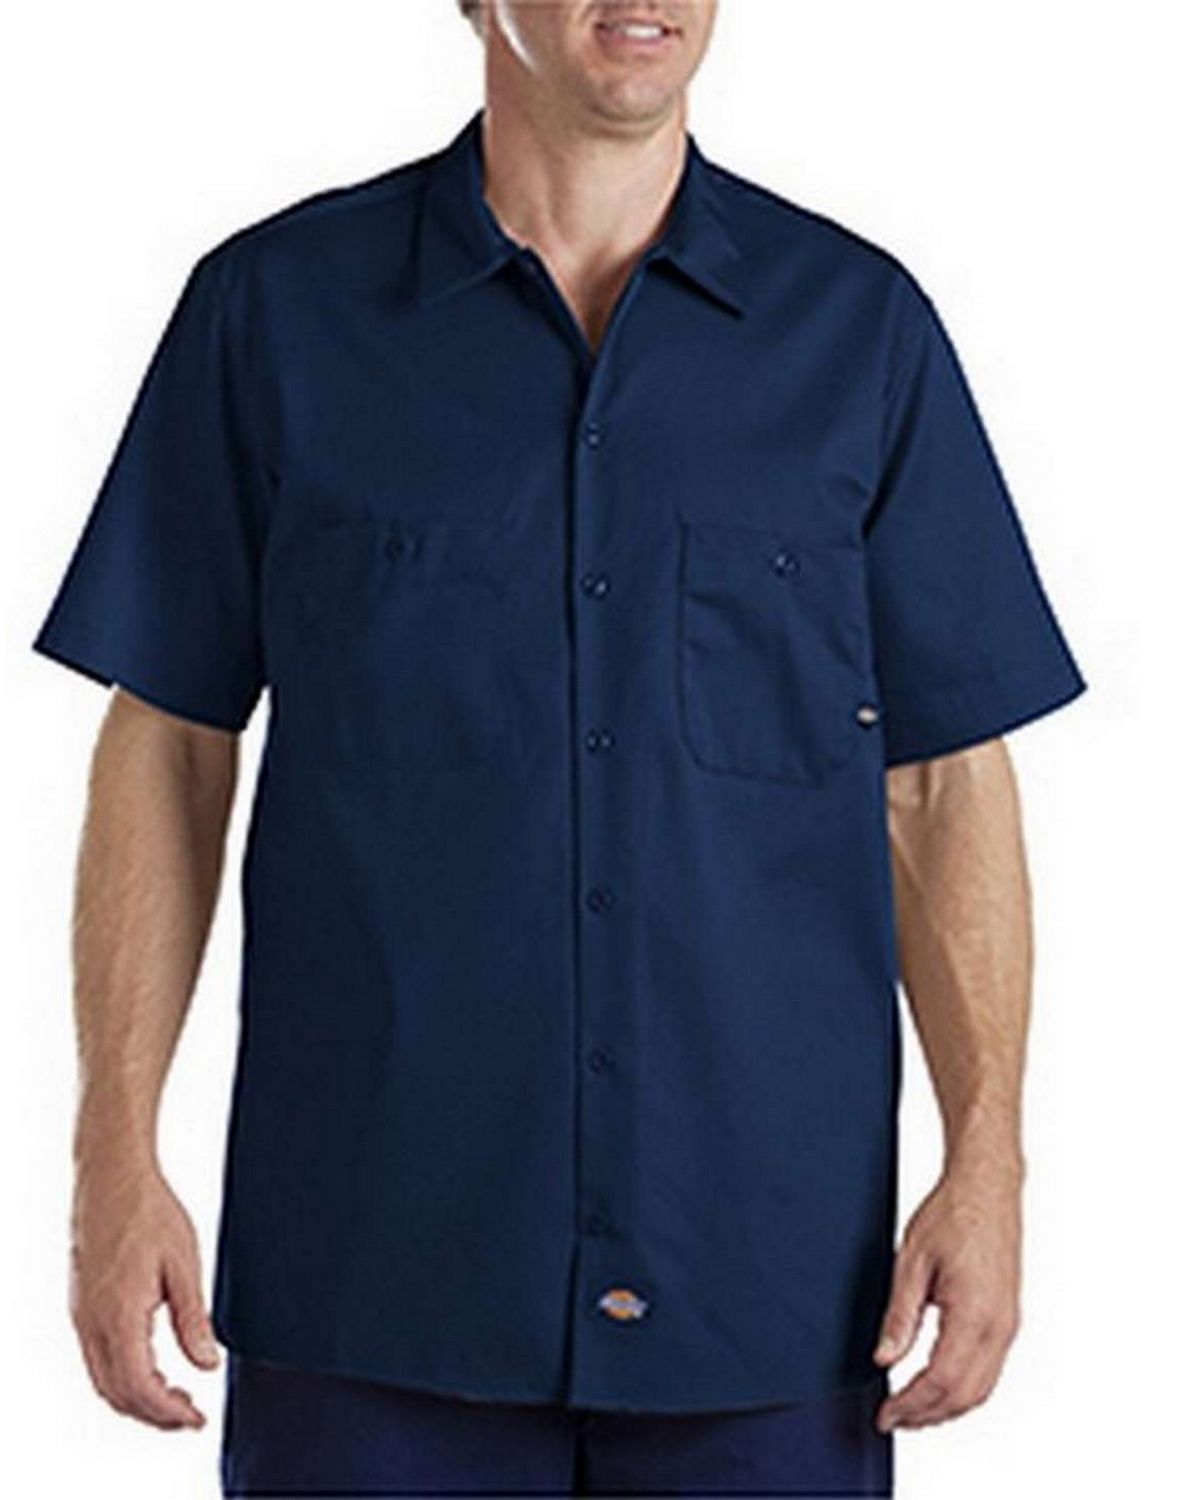 Dickies LS307 Industrial Short-Sleeve Cotton Work Shirt